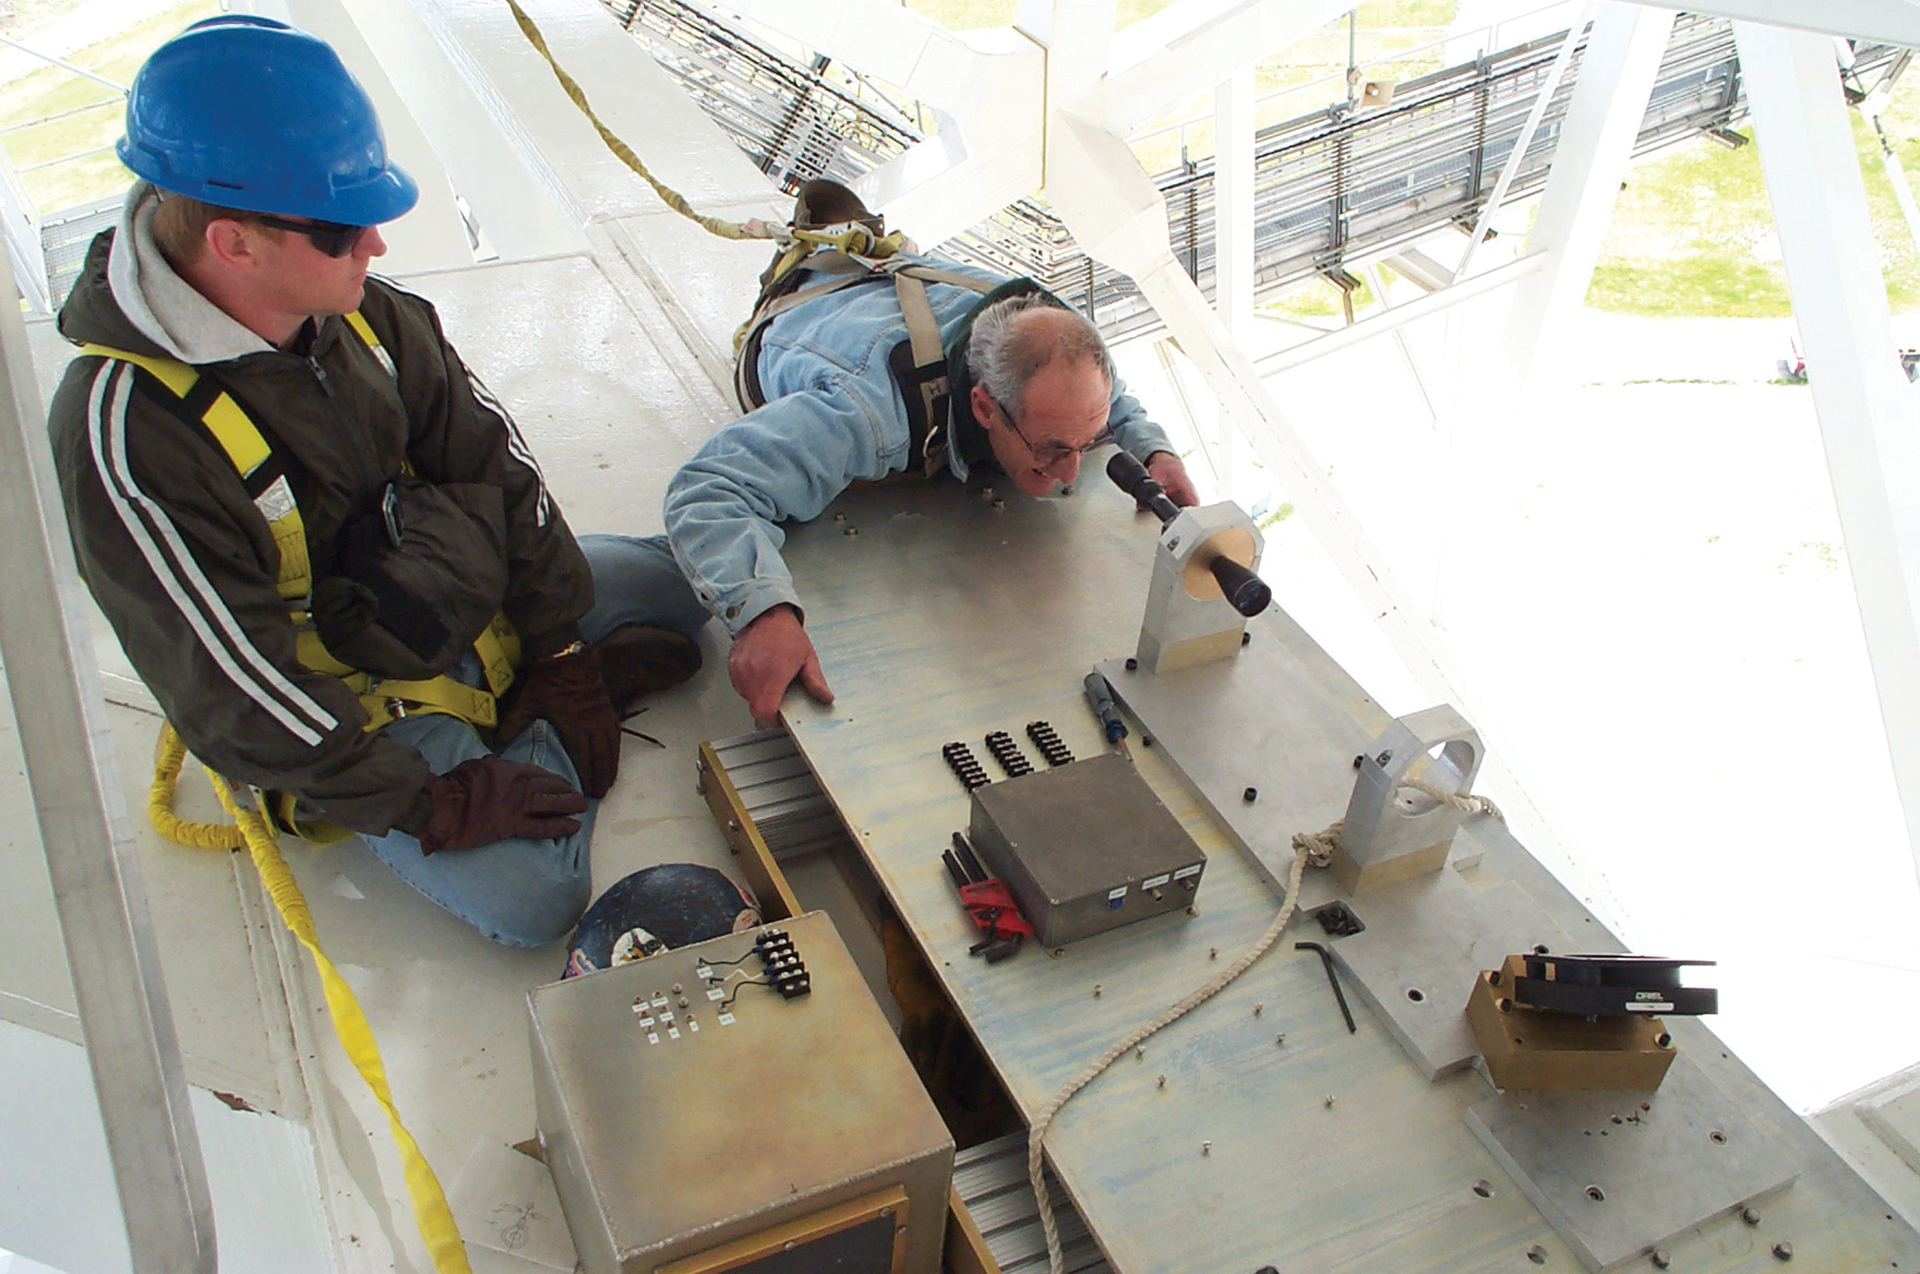 Ike Johnson and Jeff Cromer doing maintenance work on the GBT